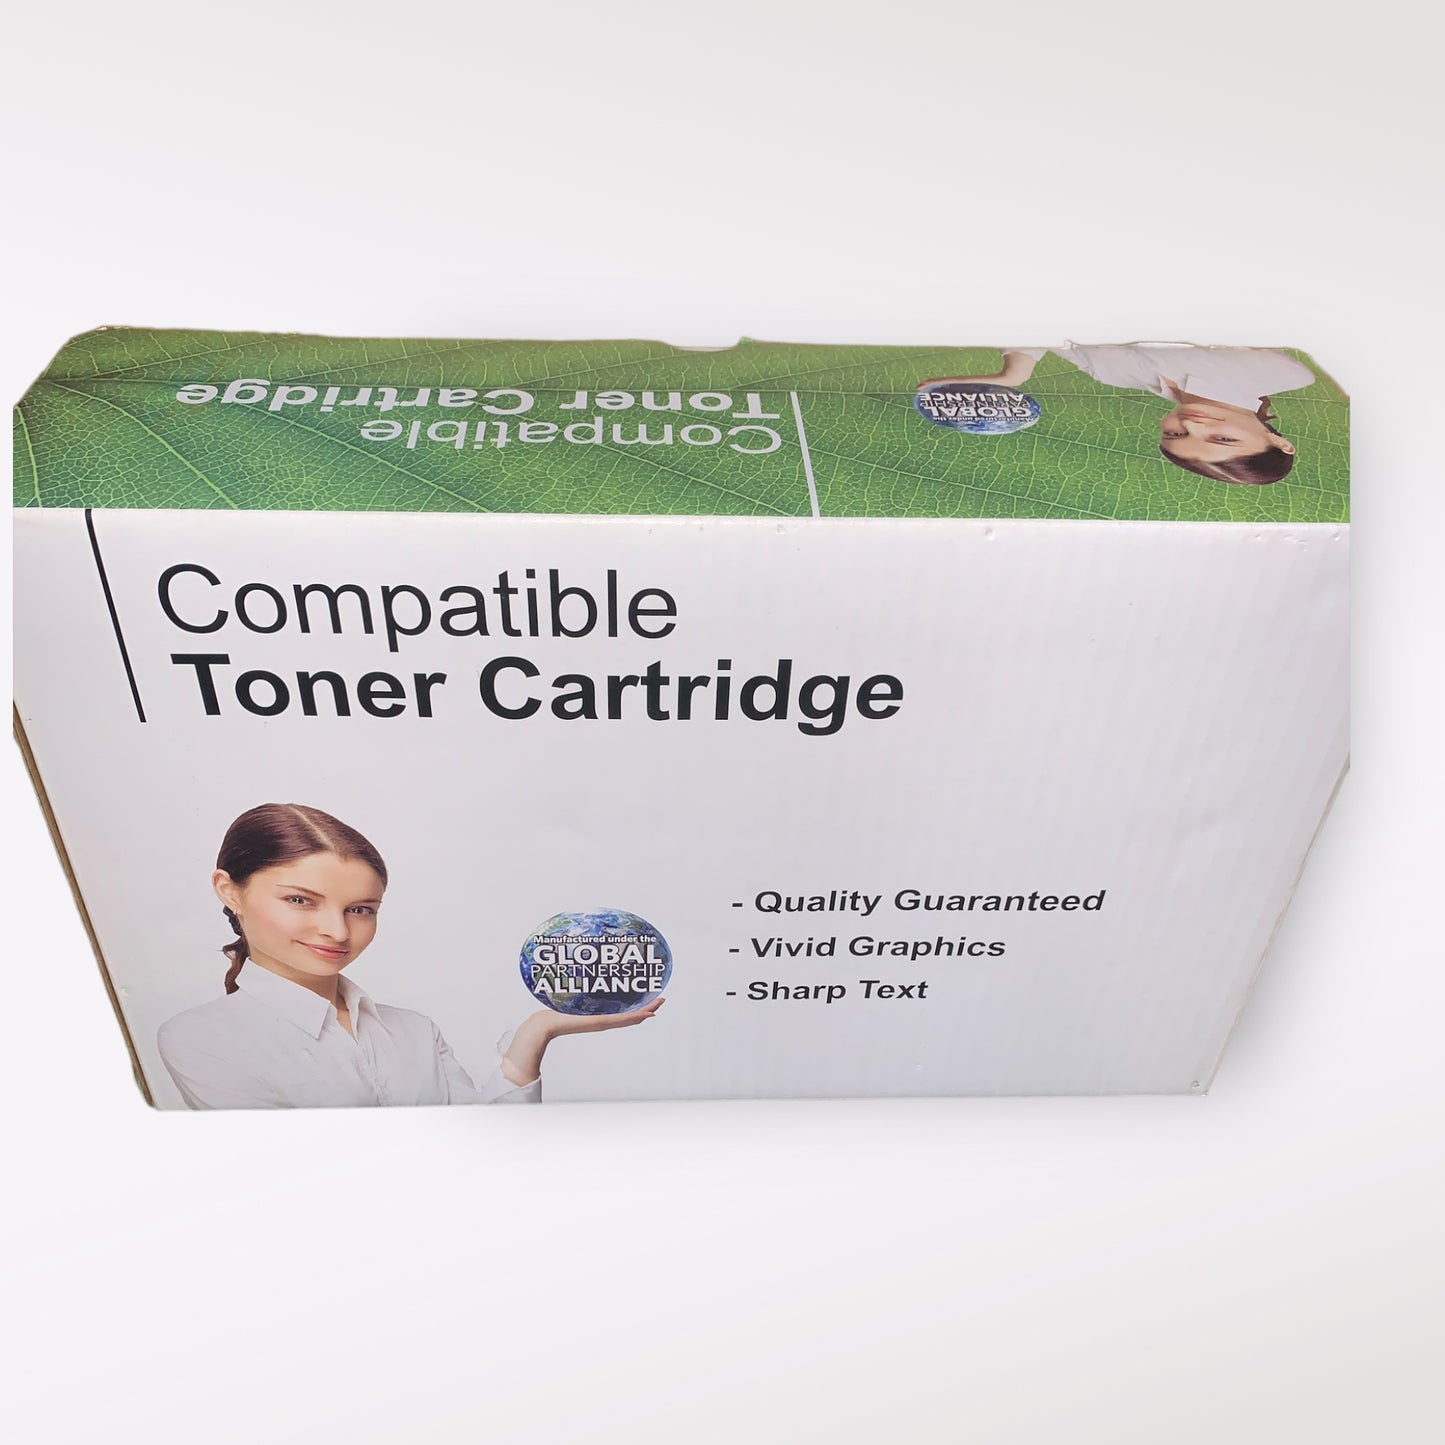 Compatible toner cartridge